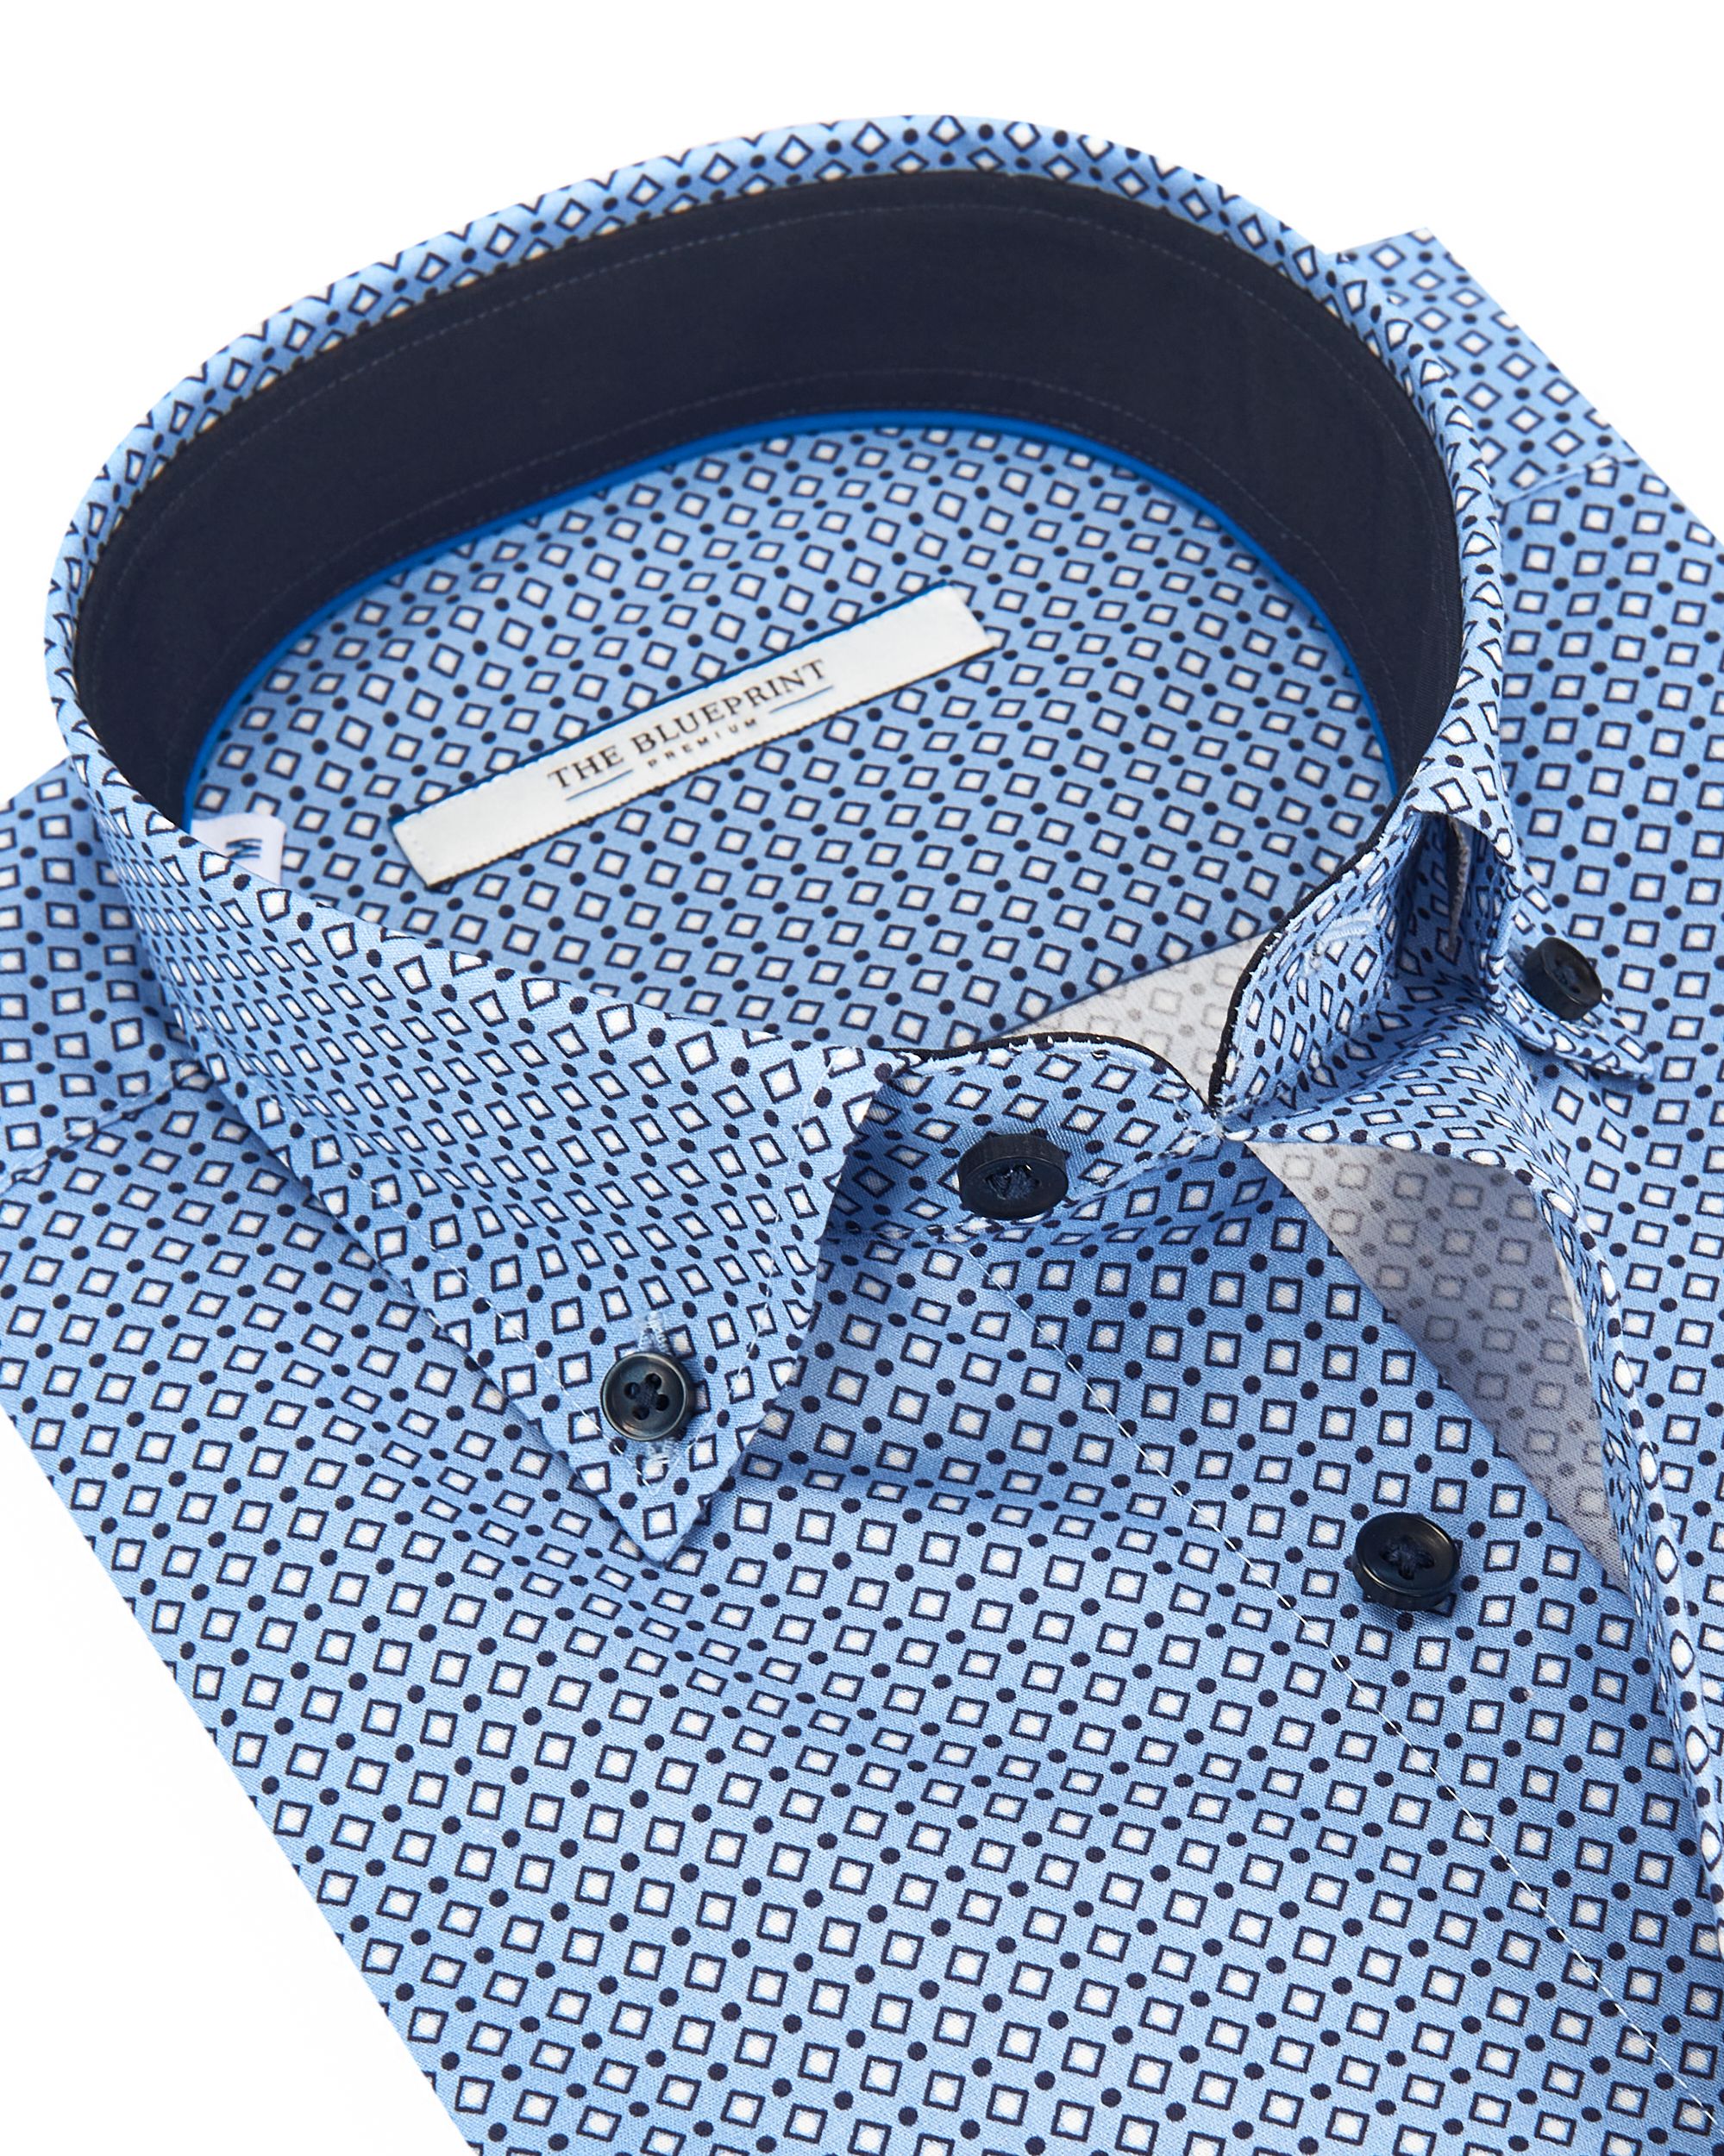 The BLUEPRINT Premium Casual Overhemd LM Lichtblauw dessin 082213-001-L